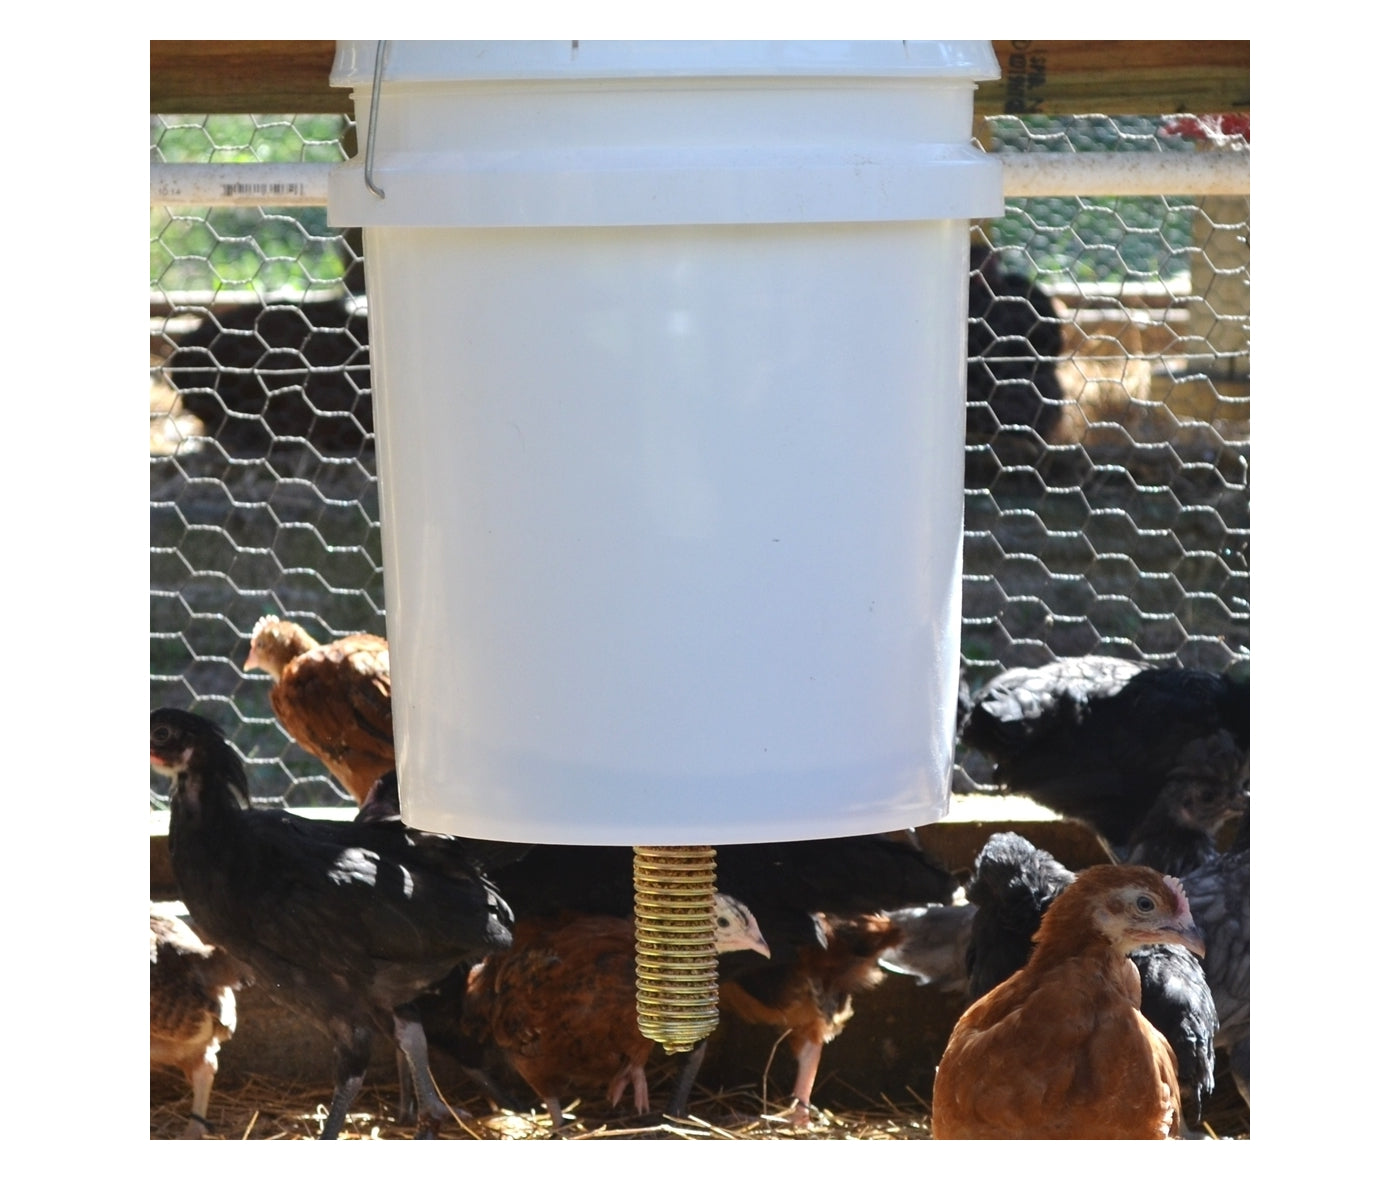 'Poultry Pecker' Spring Feeder for Chickens - Buy Online SPR Centre UK